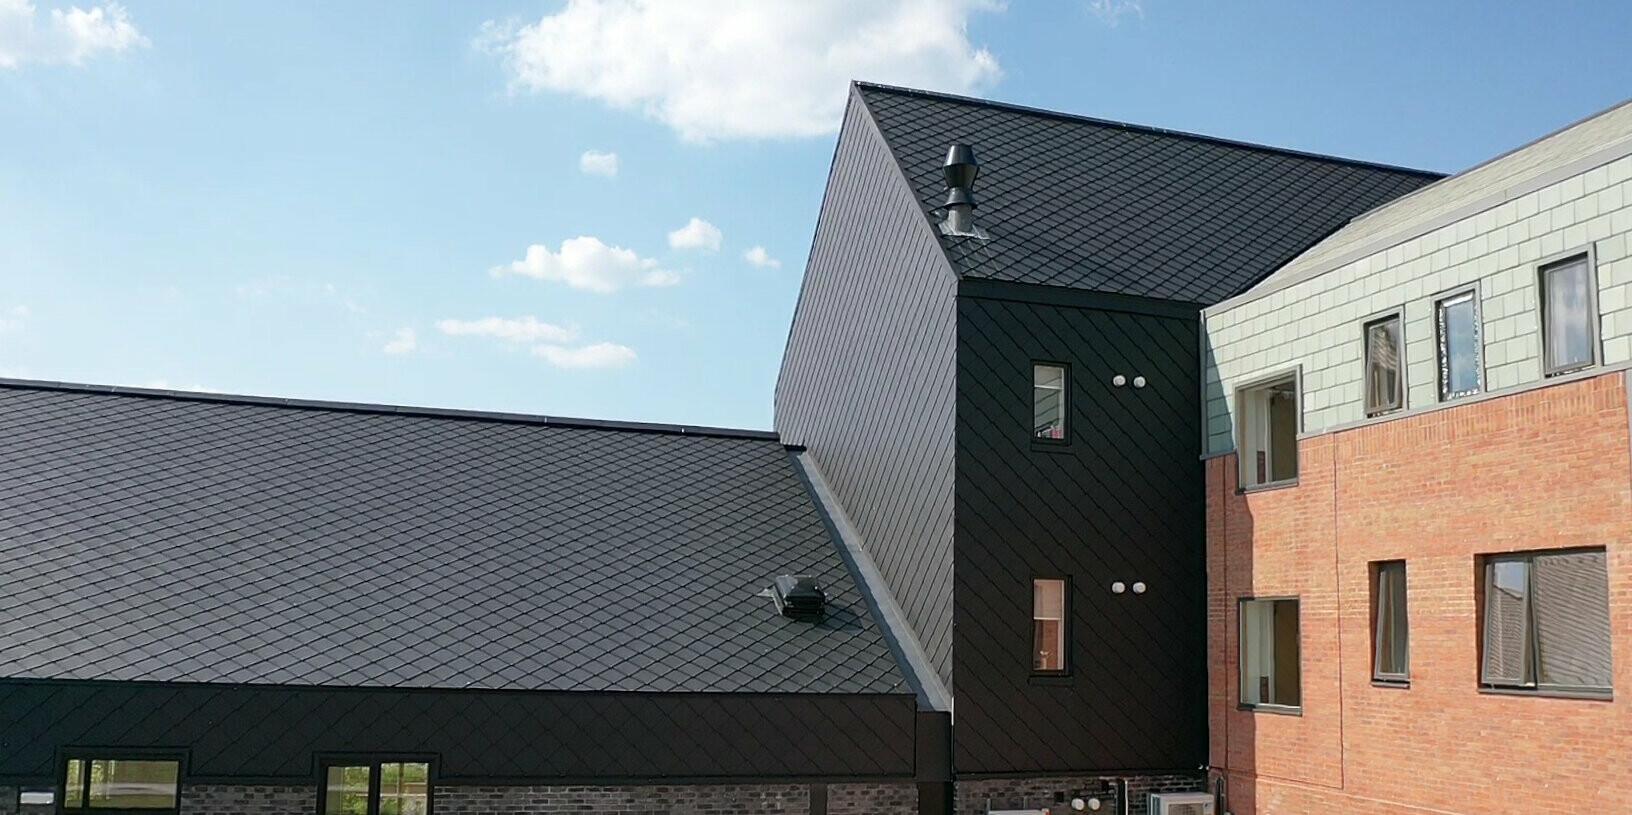 PREFA rhomboid tile 29 × 29 in P.10 Black on the building of a care facility in Preston